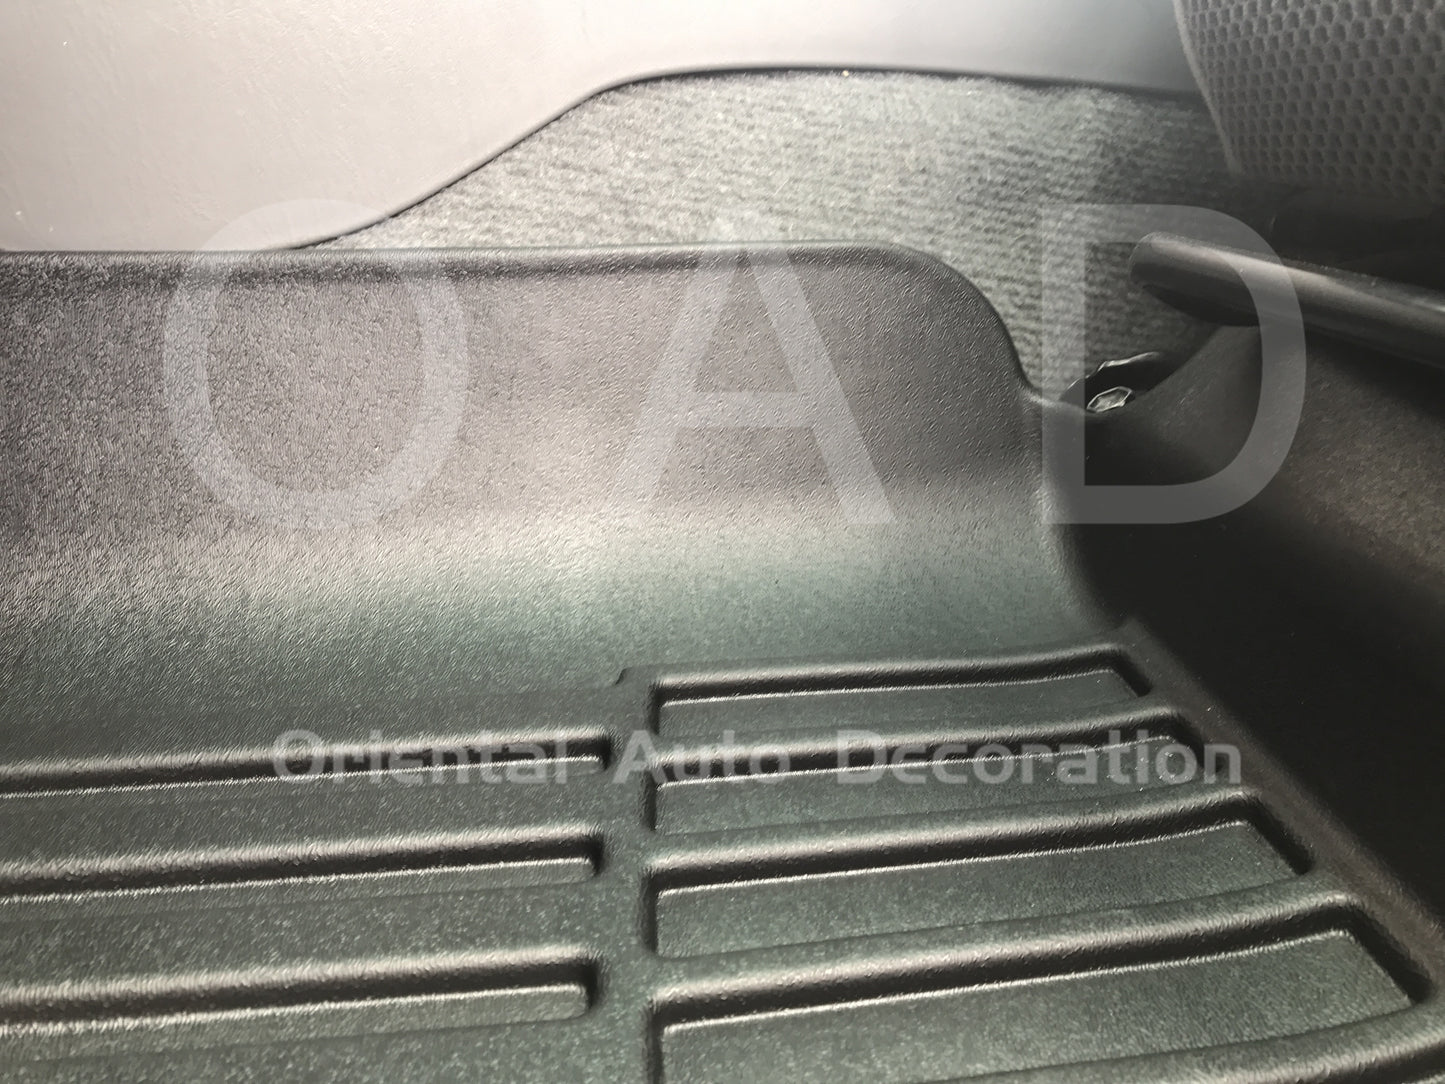 Premium Custom 3D Floor Mats for Nissan Navara NP300 D23 Dual Cab 15+ With Cup Holder Model Car Mat #T